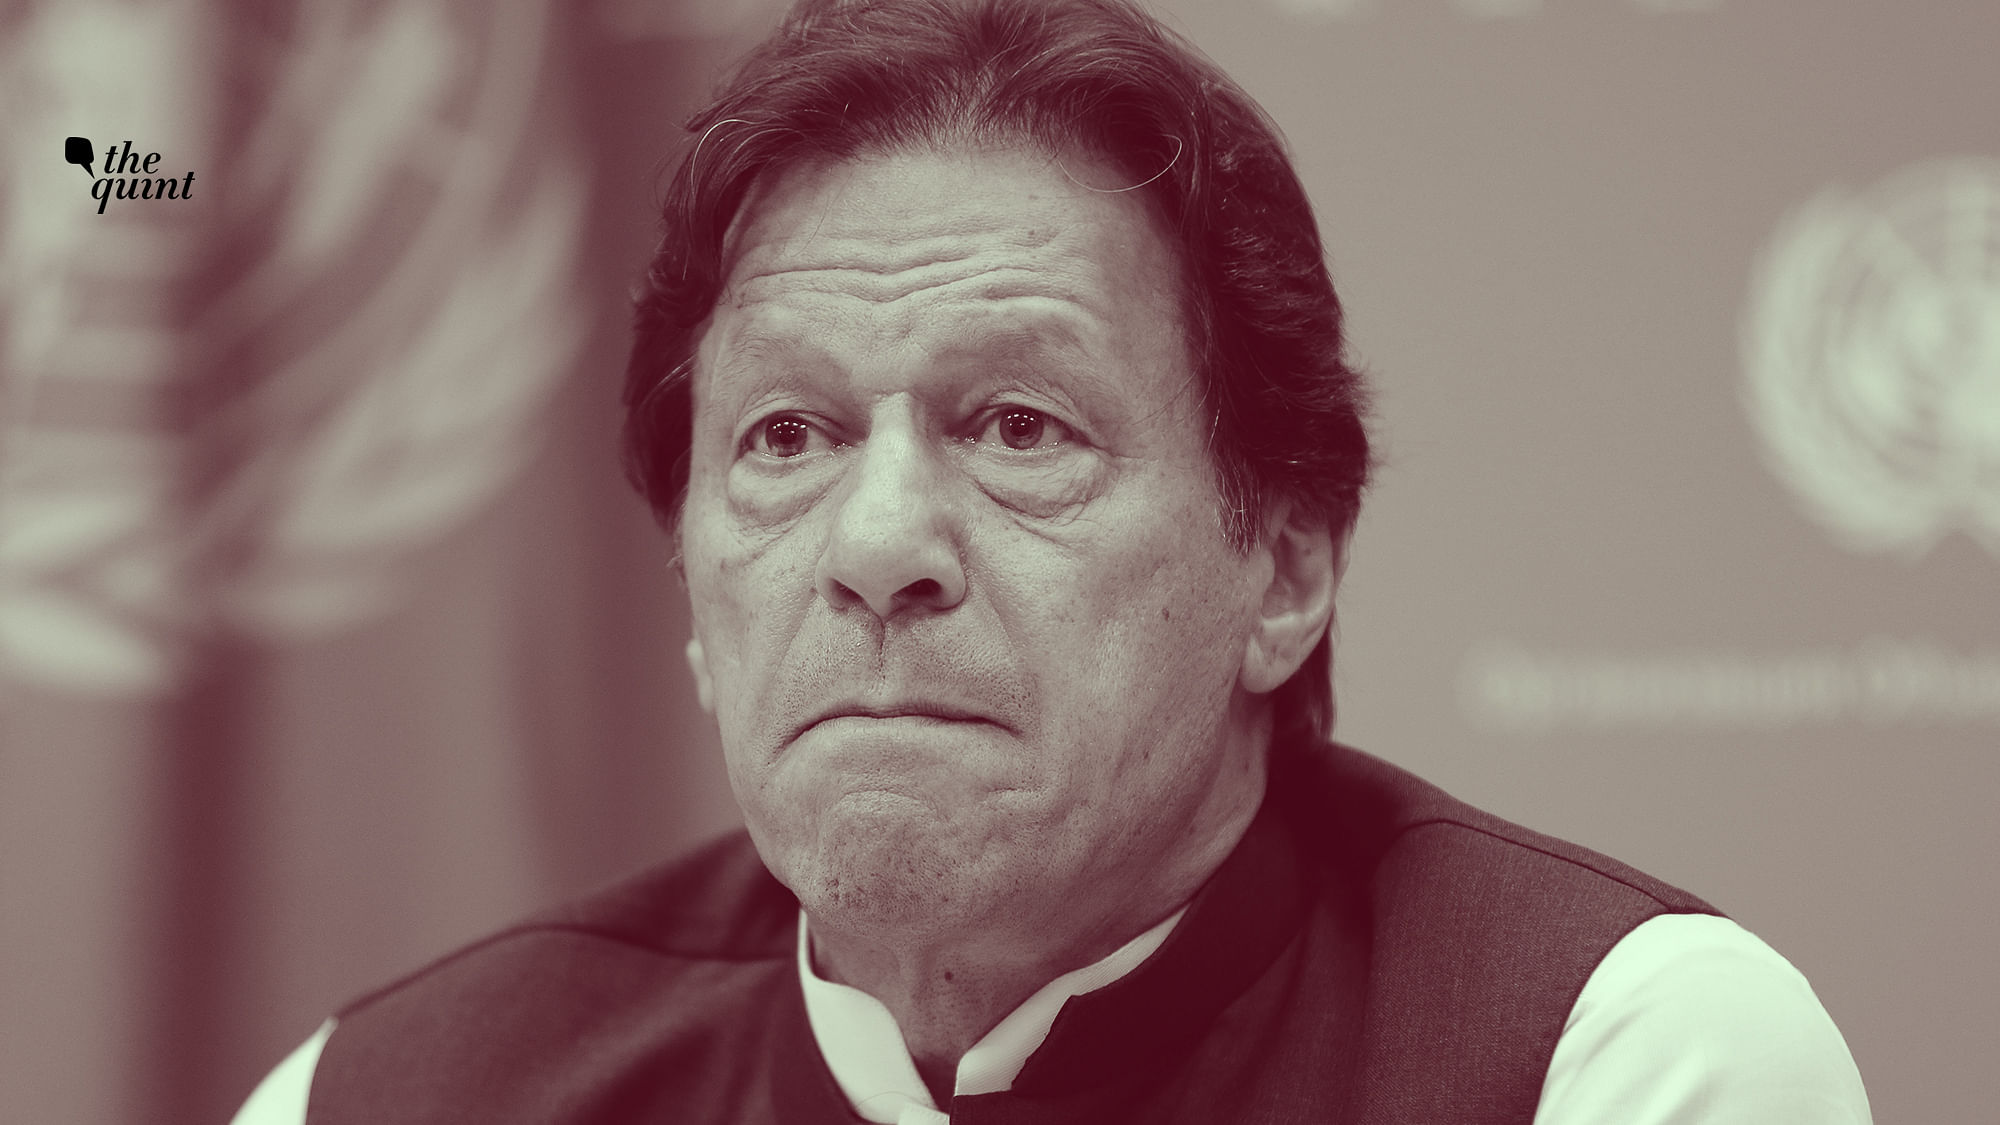 File image of Pakistan Prime Minister Imran Khan, used for representational purposes.